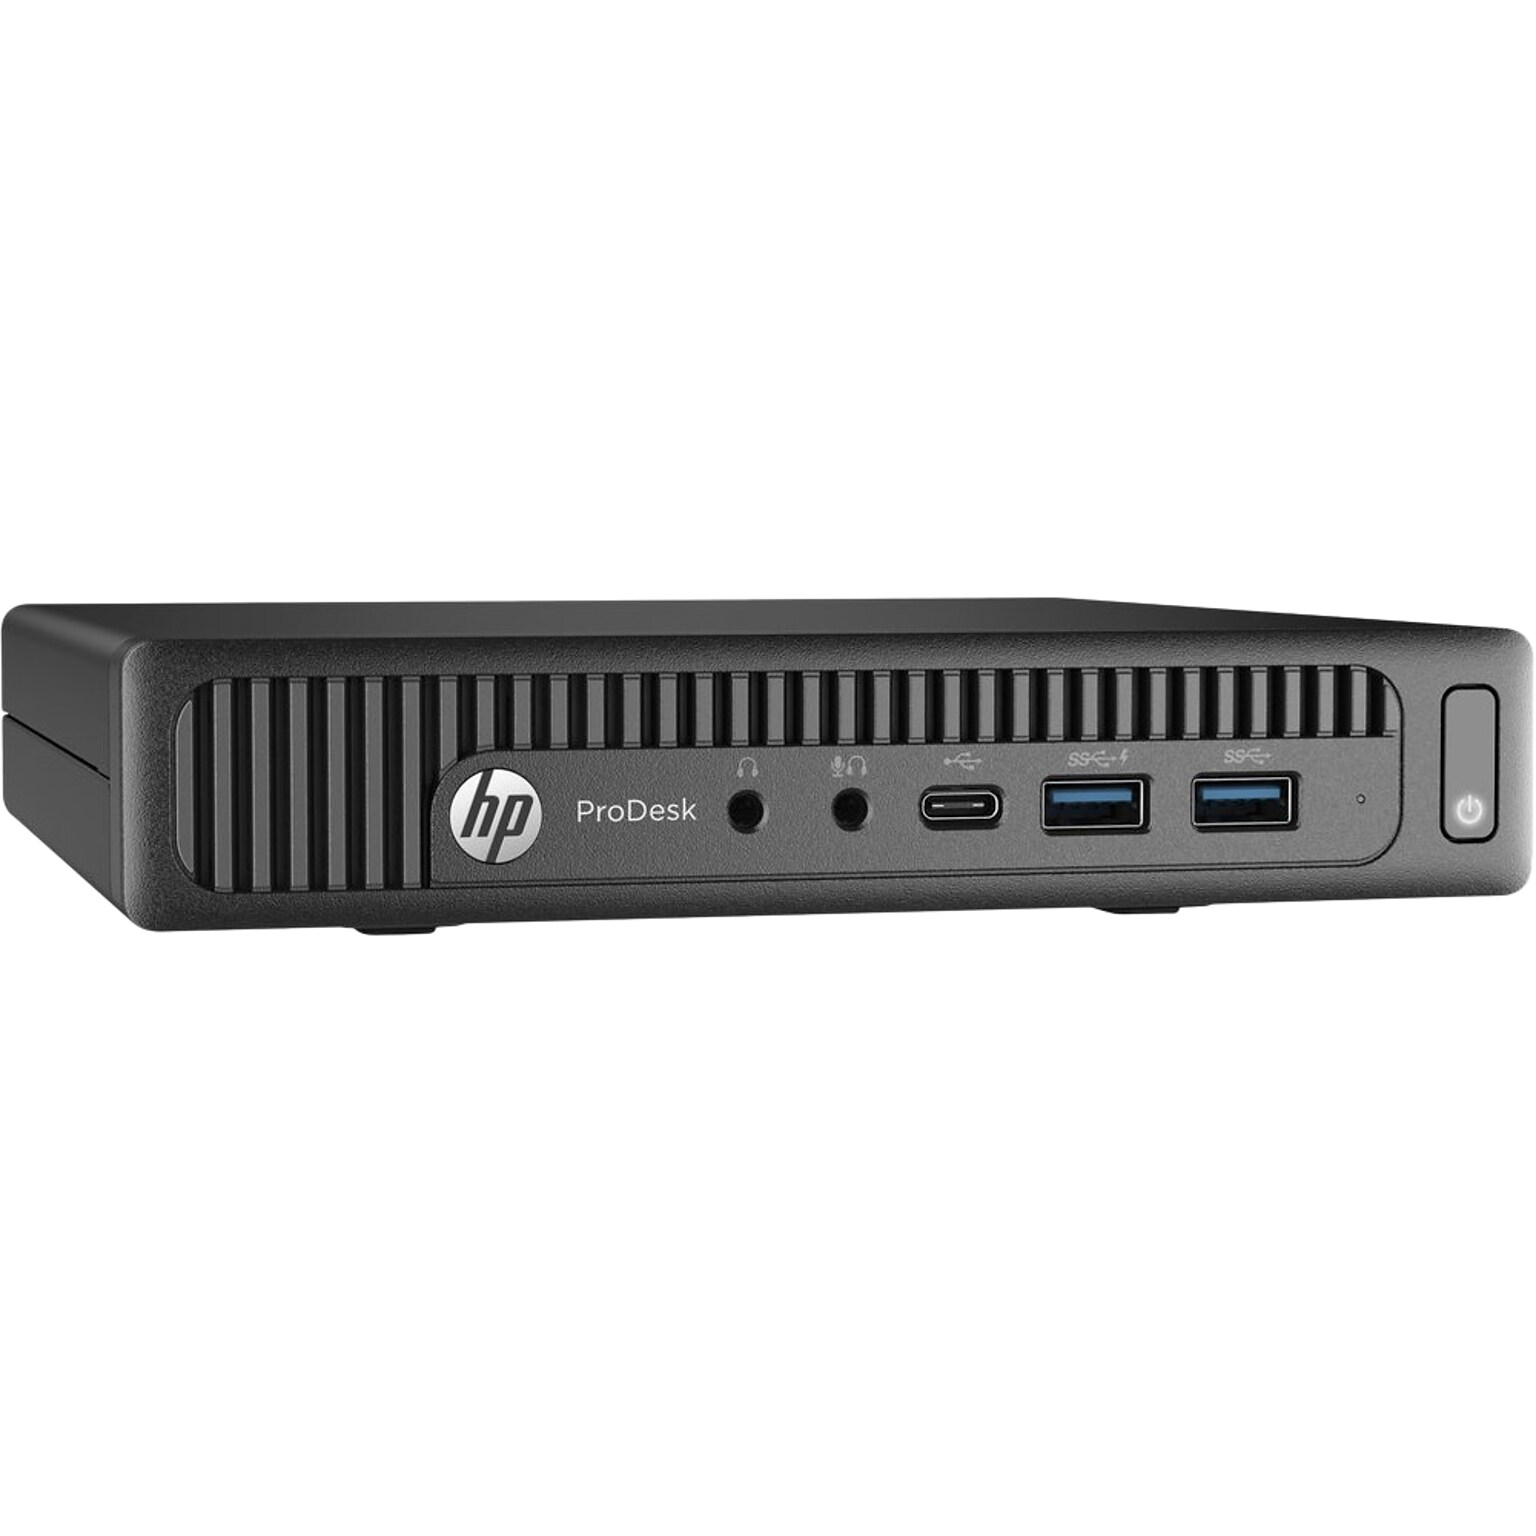 HP ProDesk 600 G2 Refurbished Mini Desktop Computer, Intel Core i5-6400T, 16GB Memory, 256GB SSD